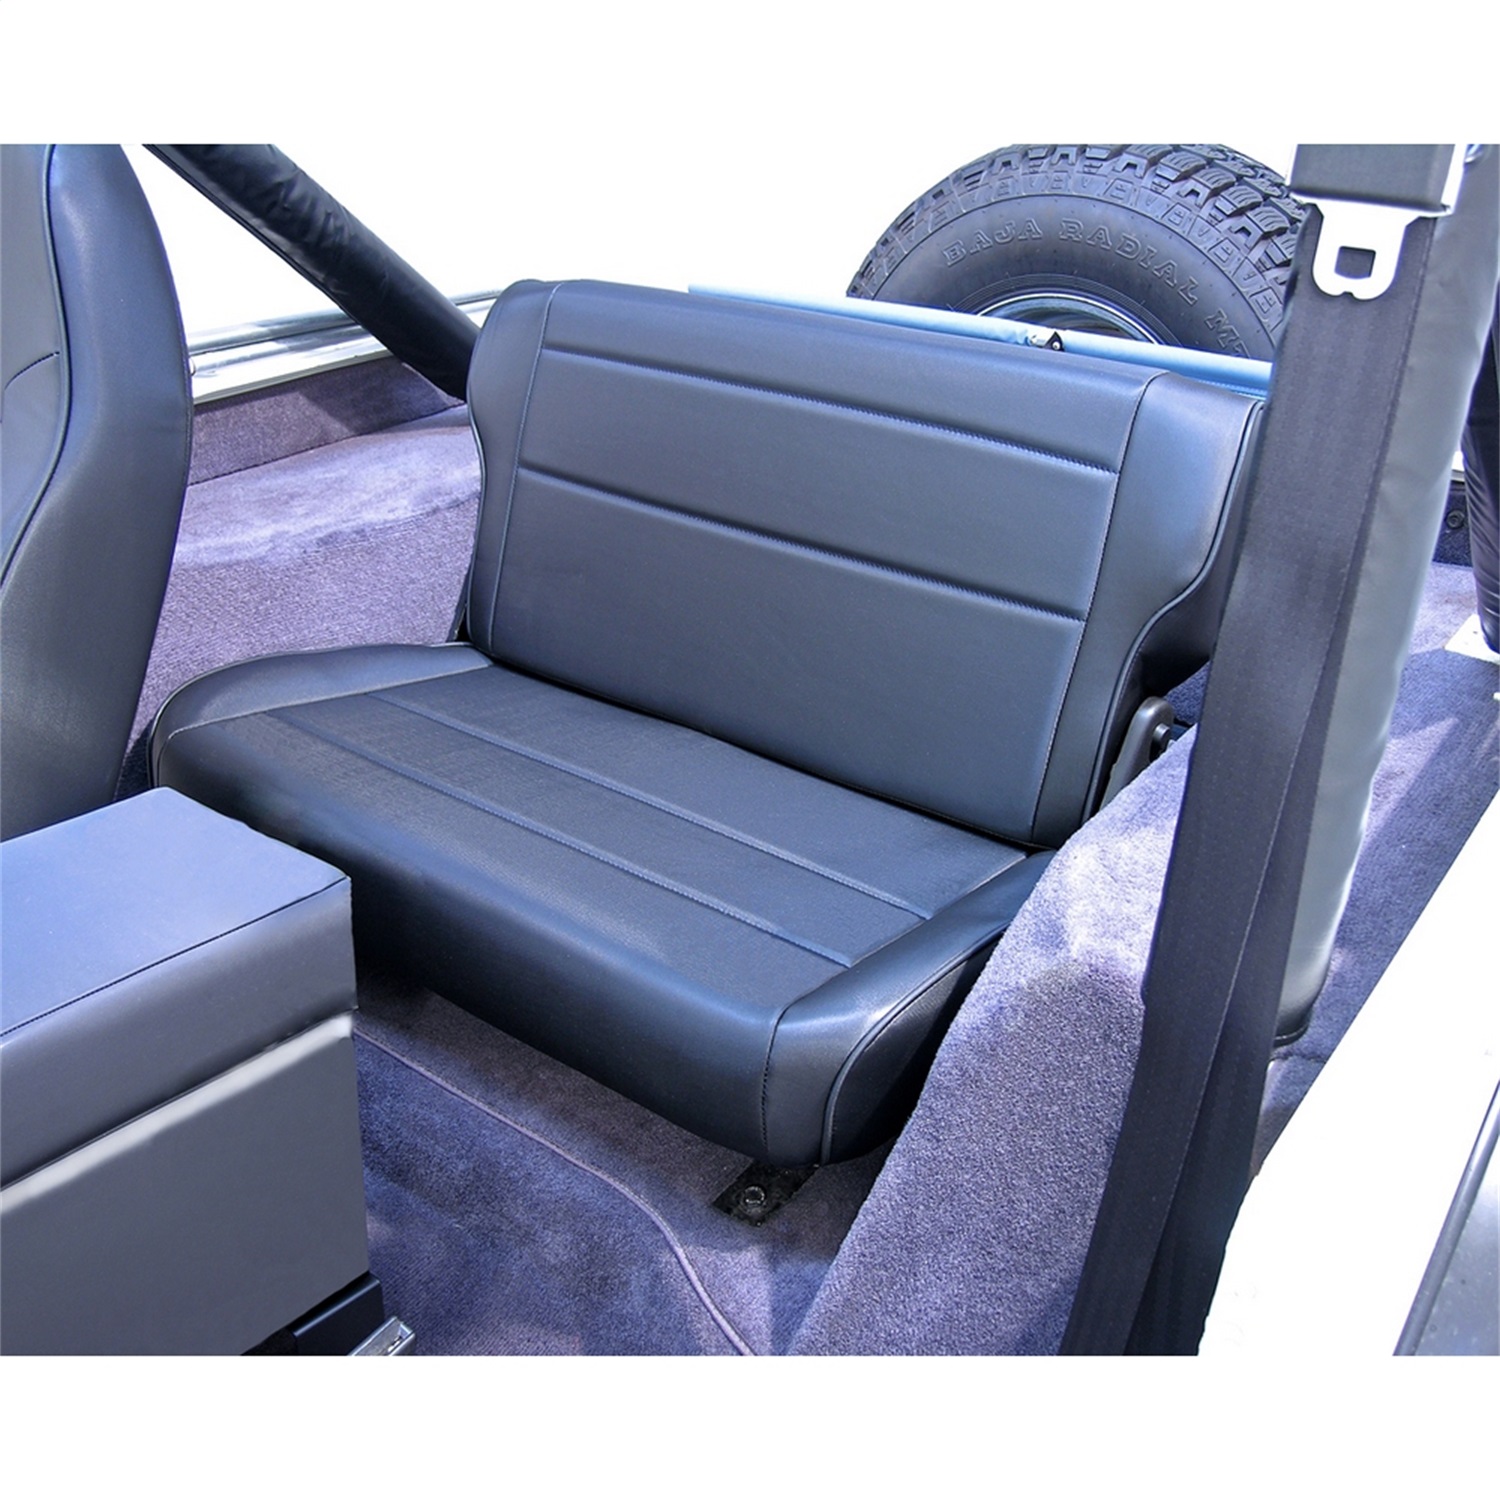 Rugged Ridge 13462.01 Fold And Tumble Rear Seat Fits 86-95 CJ7 Wrangler (YJ)